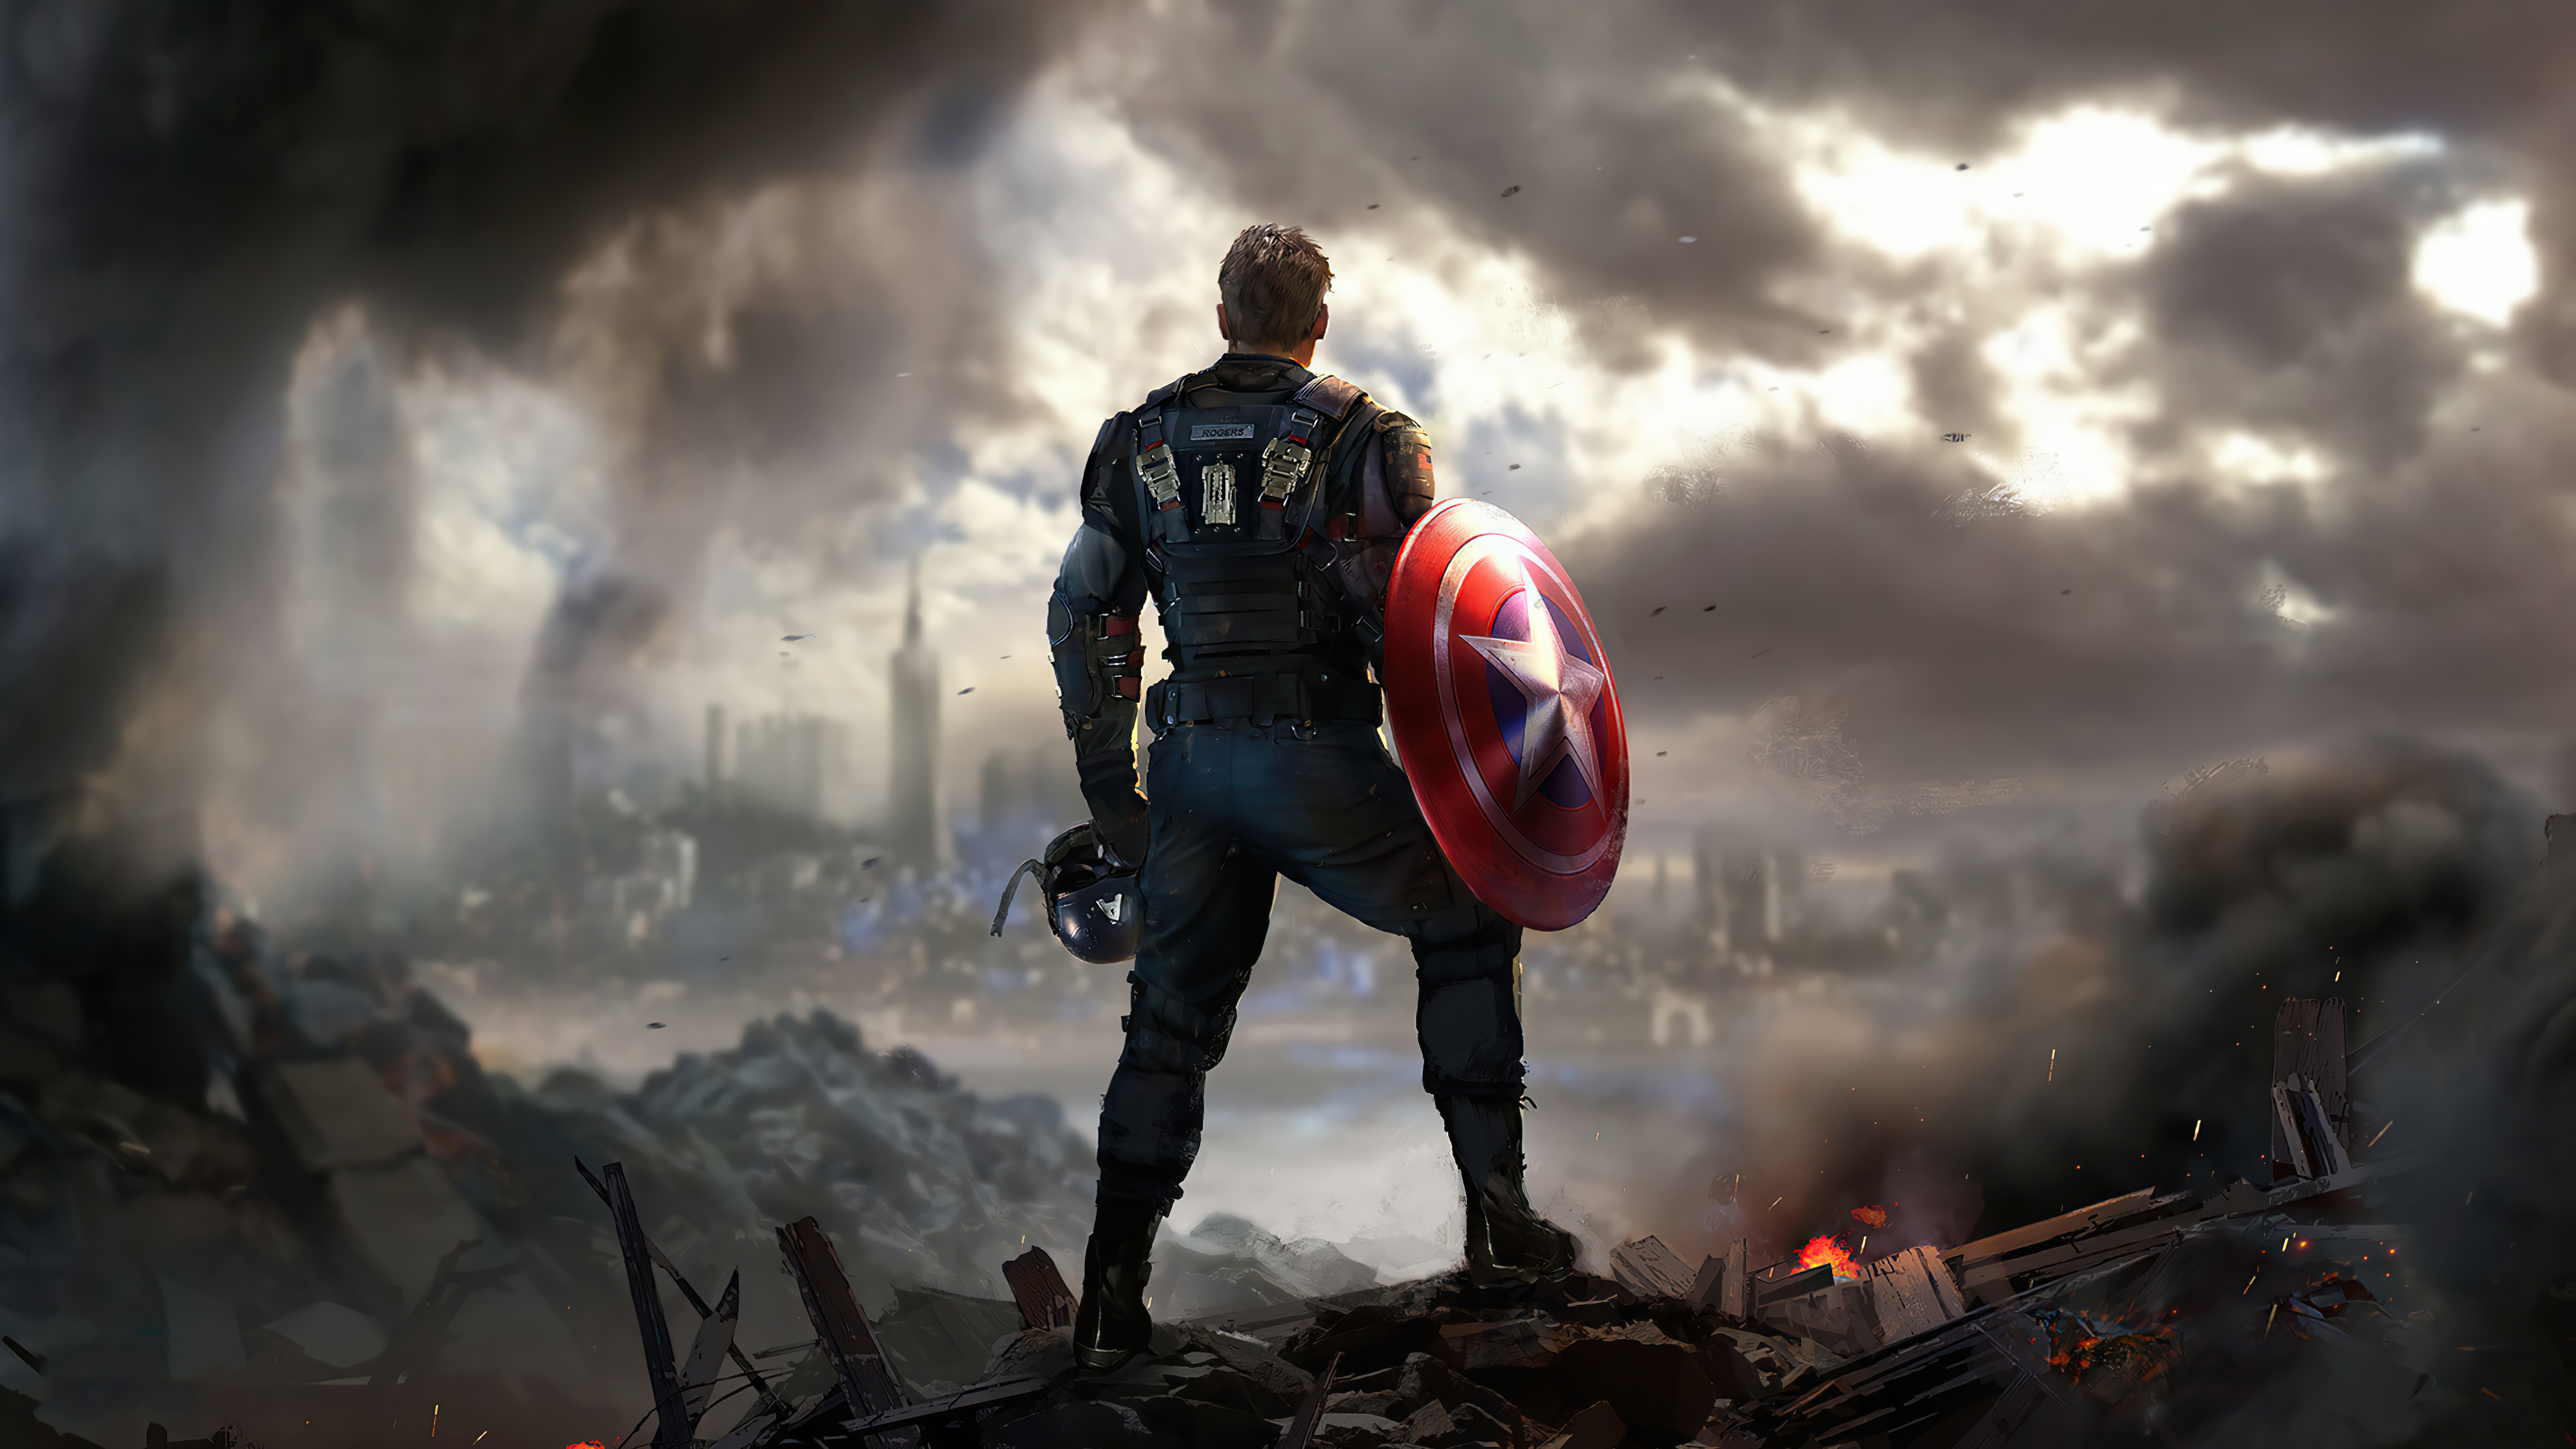 Капитан Америка (Captain America), 1990